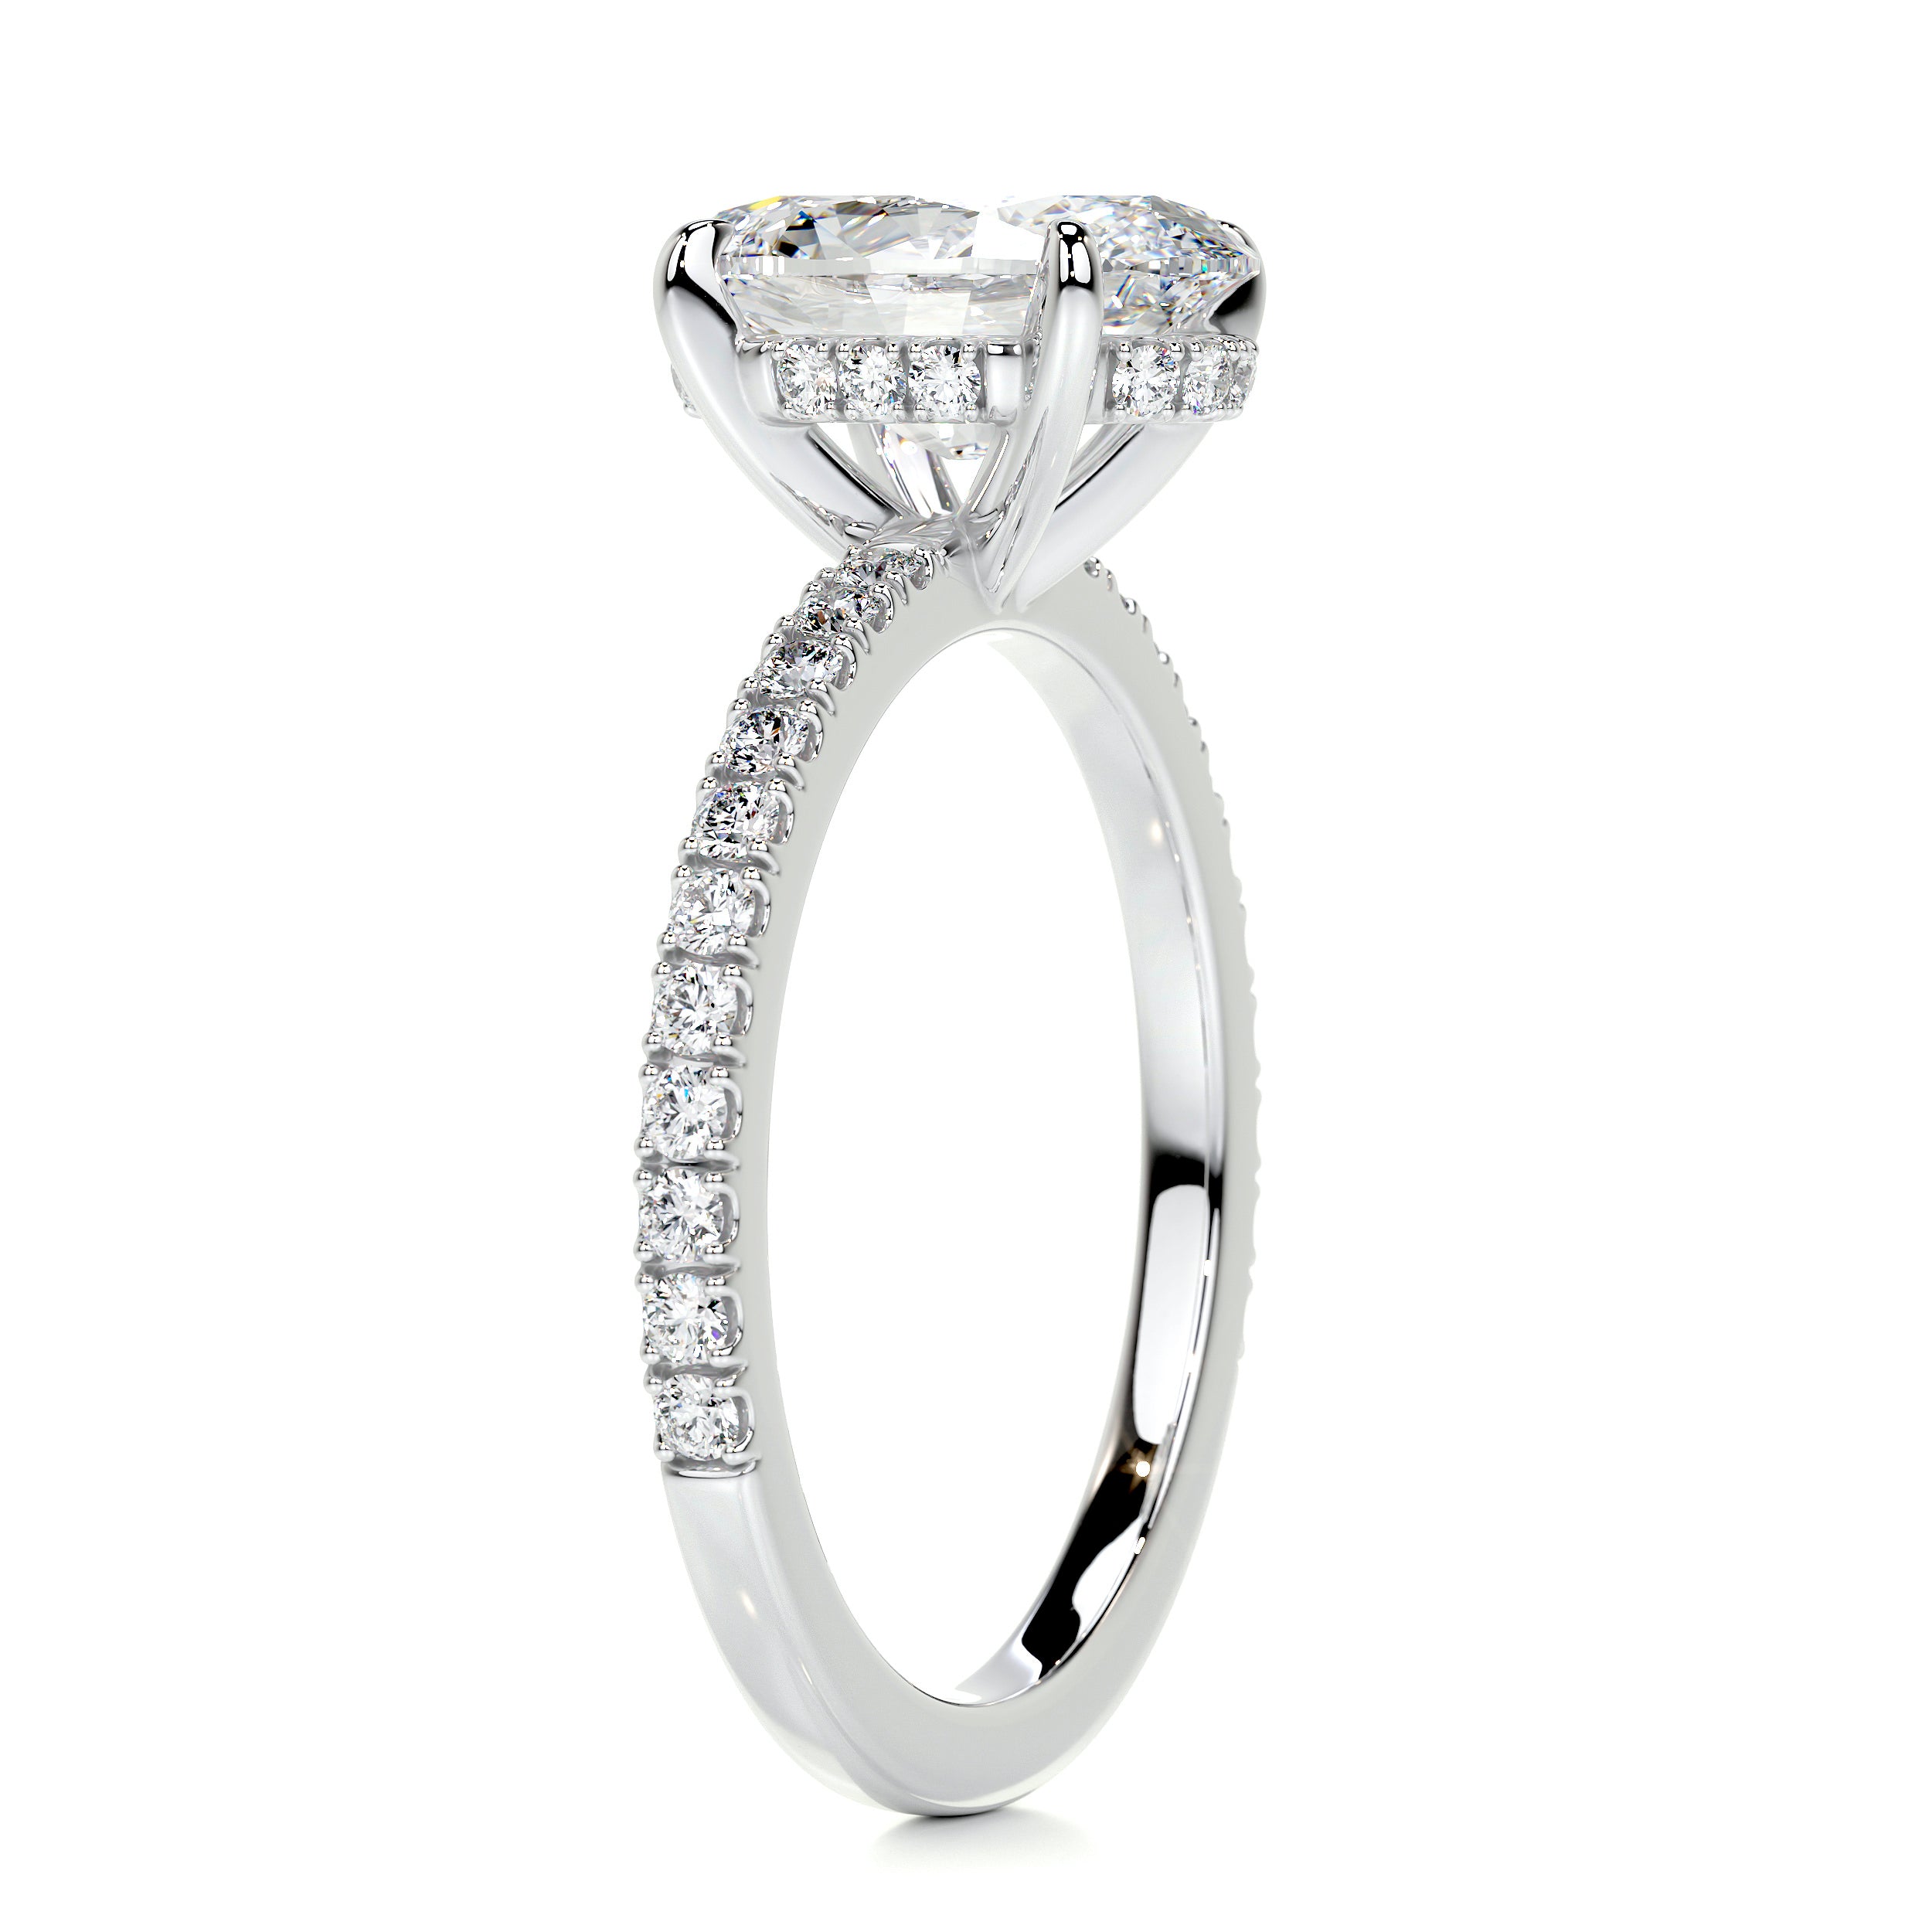 Lucy Diamond Engagement Ring   (2 Carat) -18K White Gold